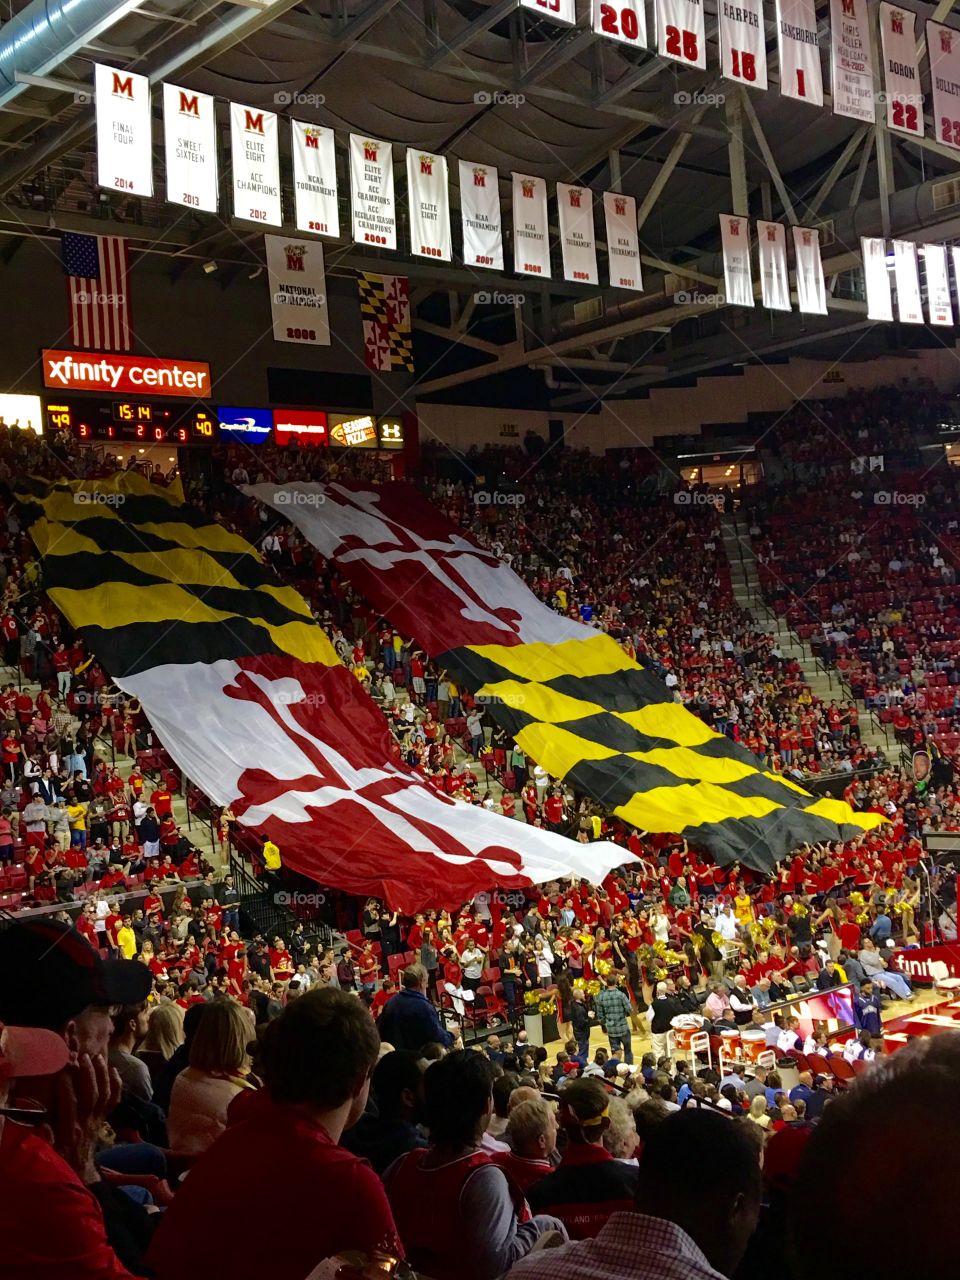 University of Maryland Basketball Game